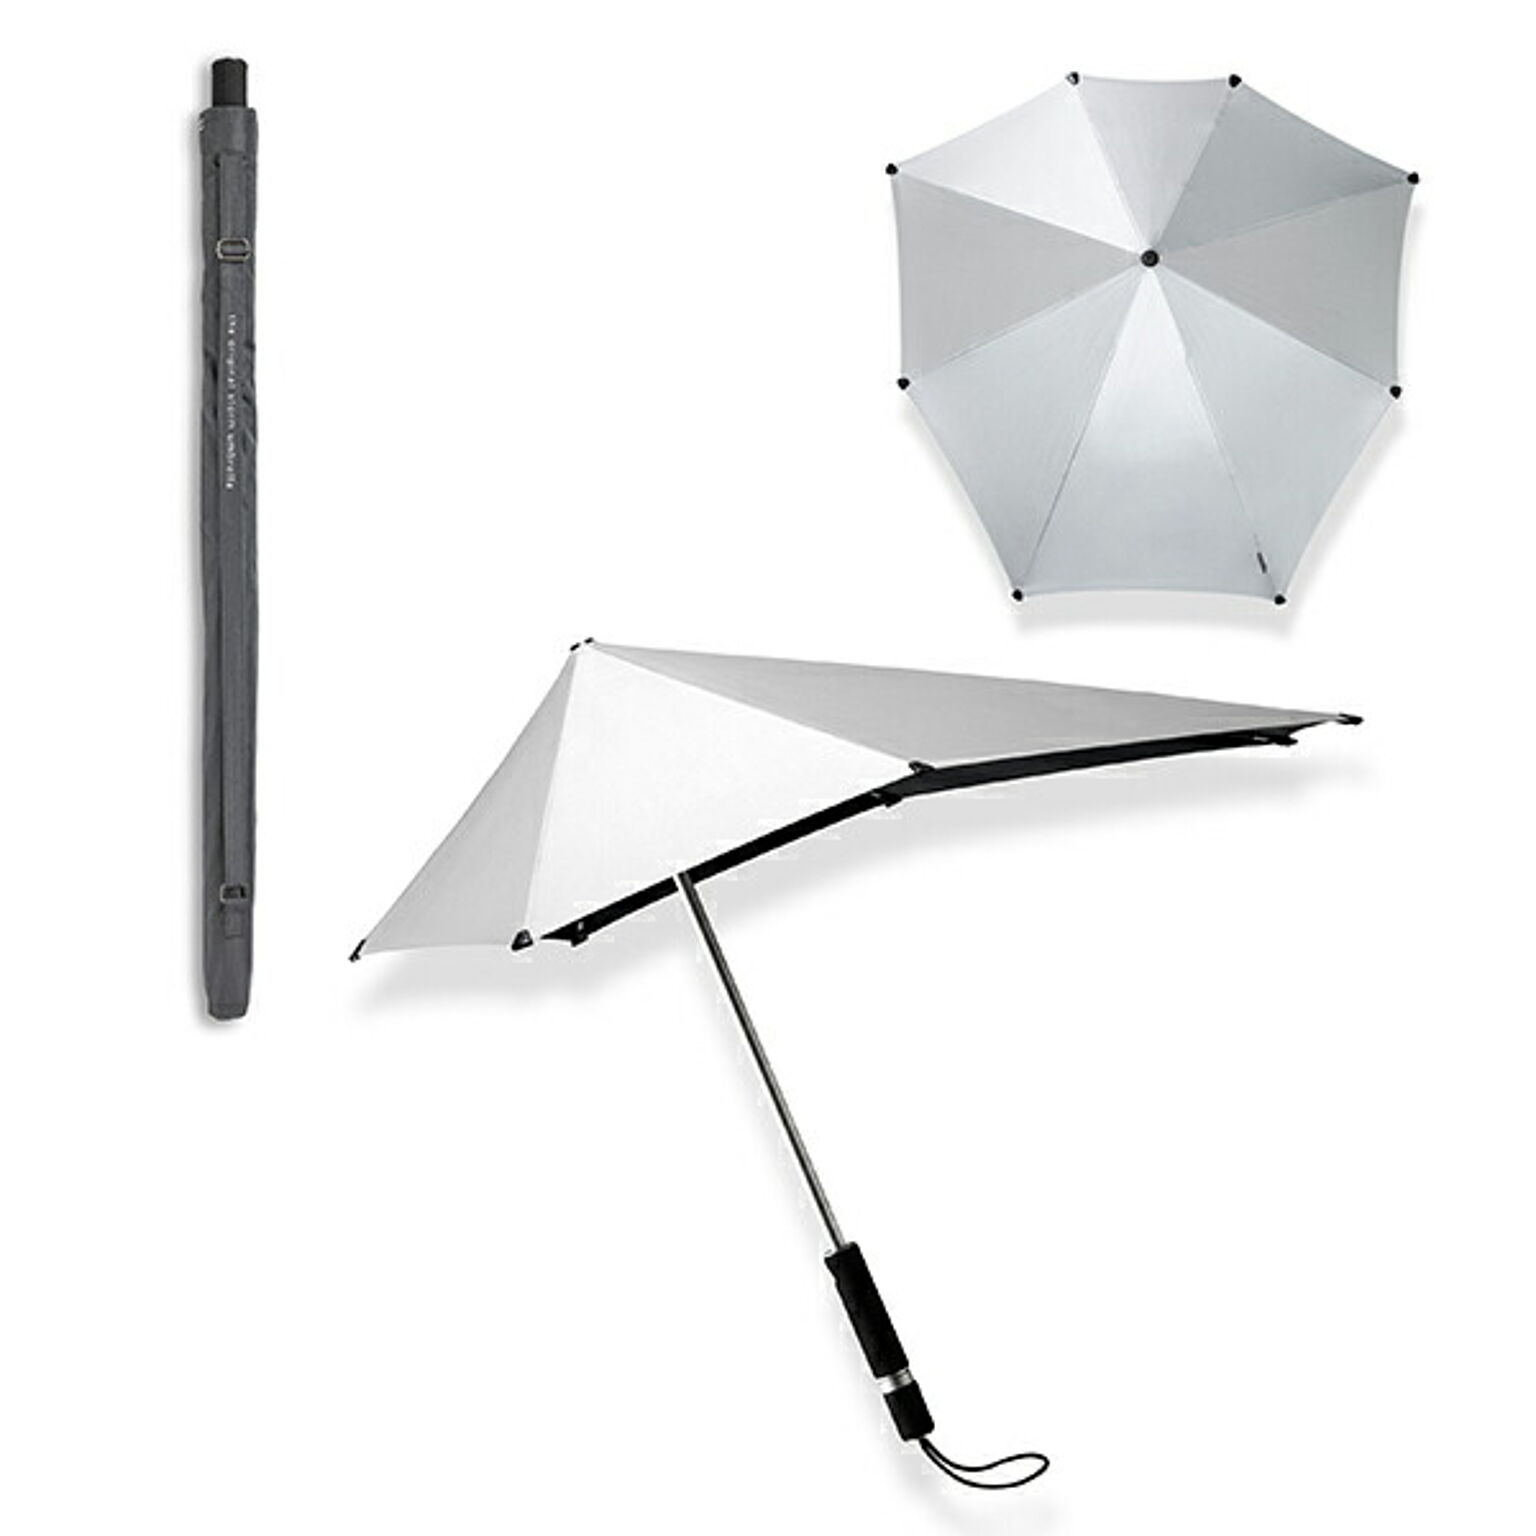 senz umbrellas 傘 オリジナル SZN-001 SZN-001